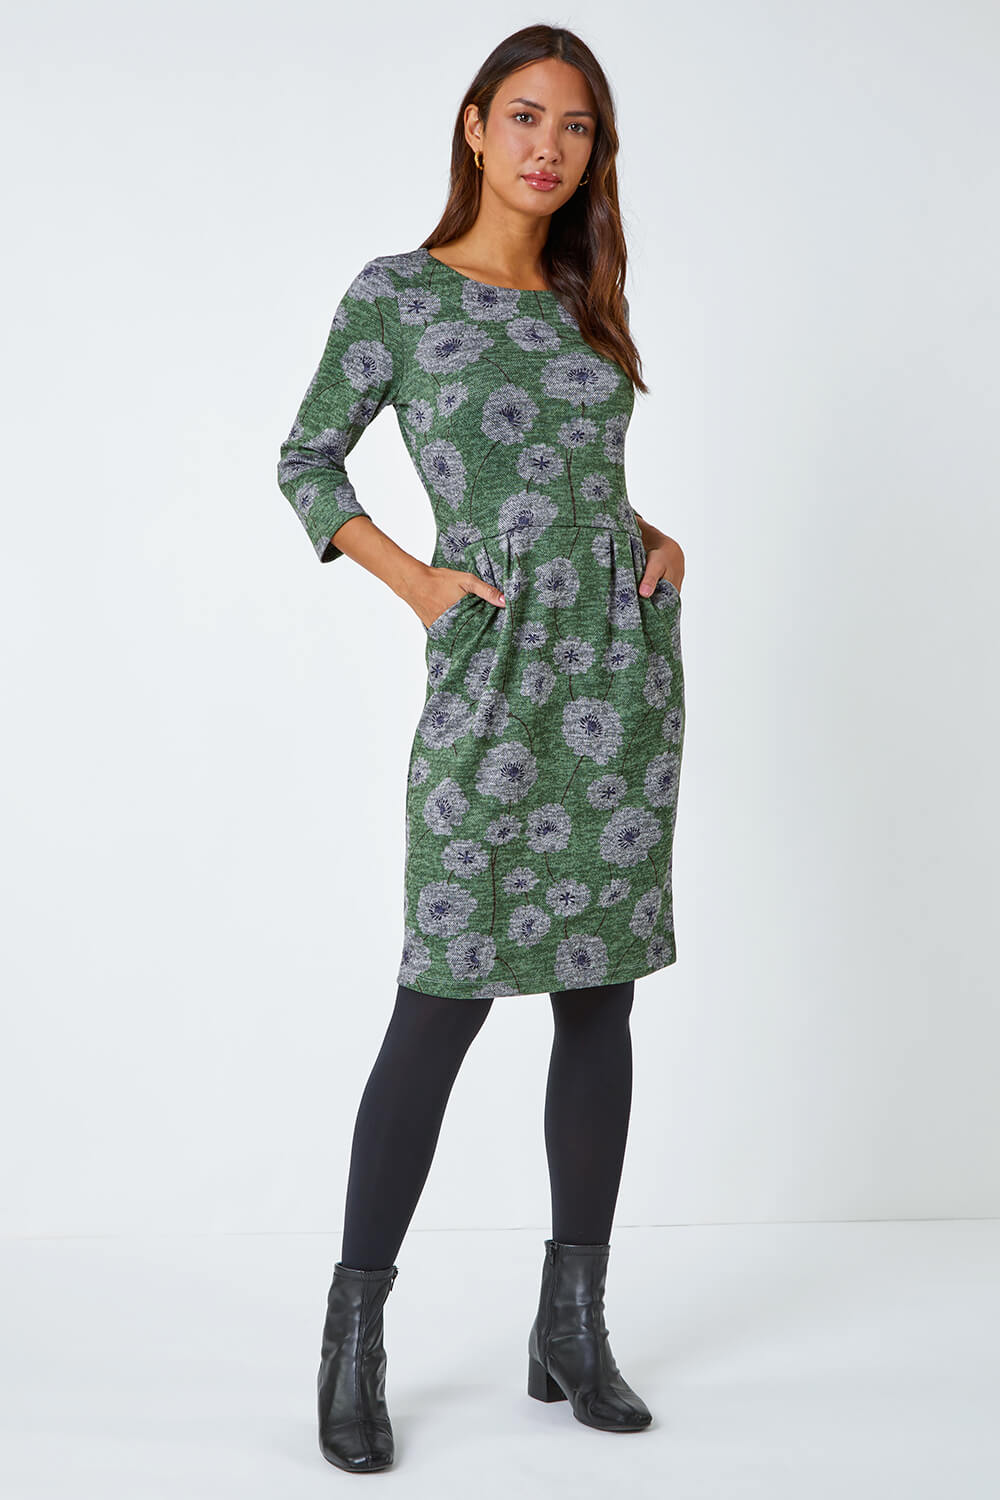 Green Floral Print Pocket Stretch Dress, Image 2 of 5